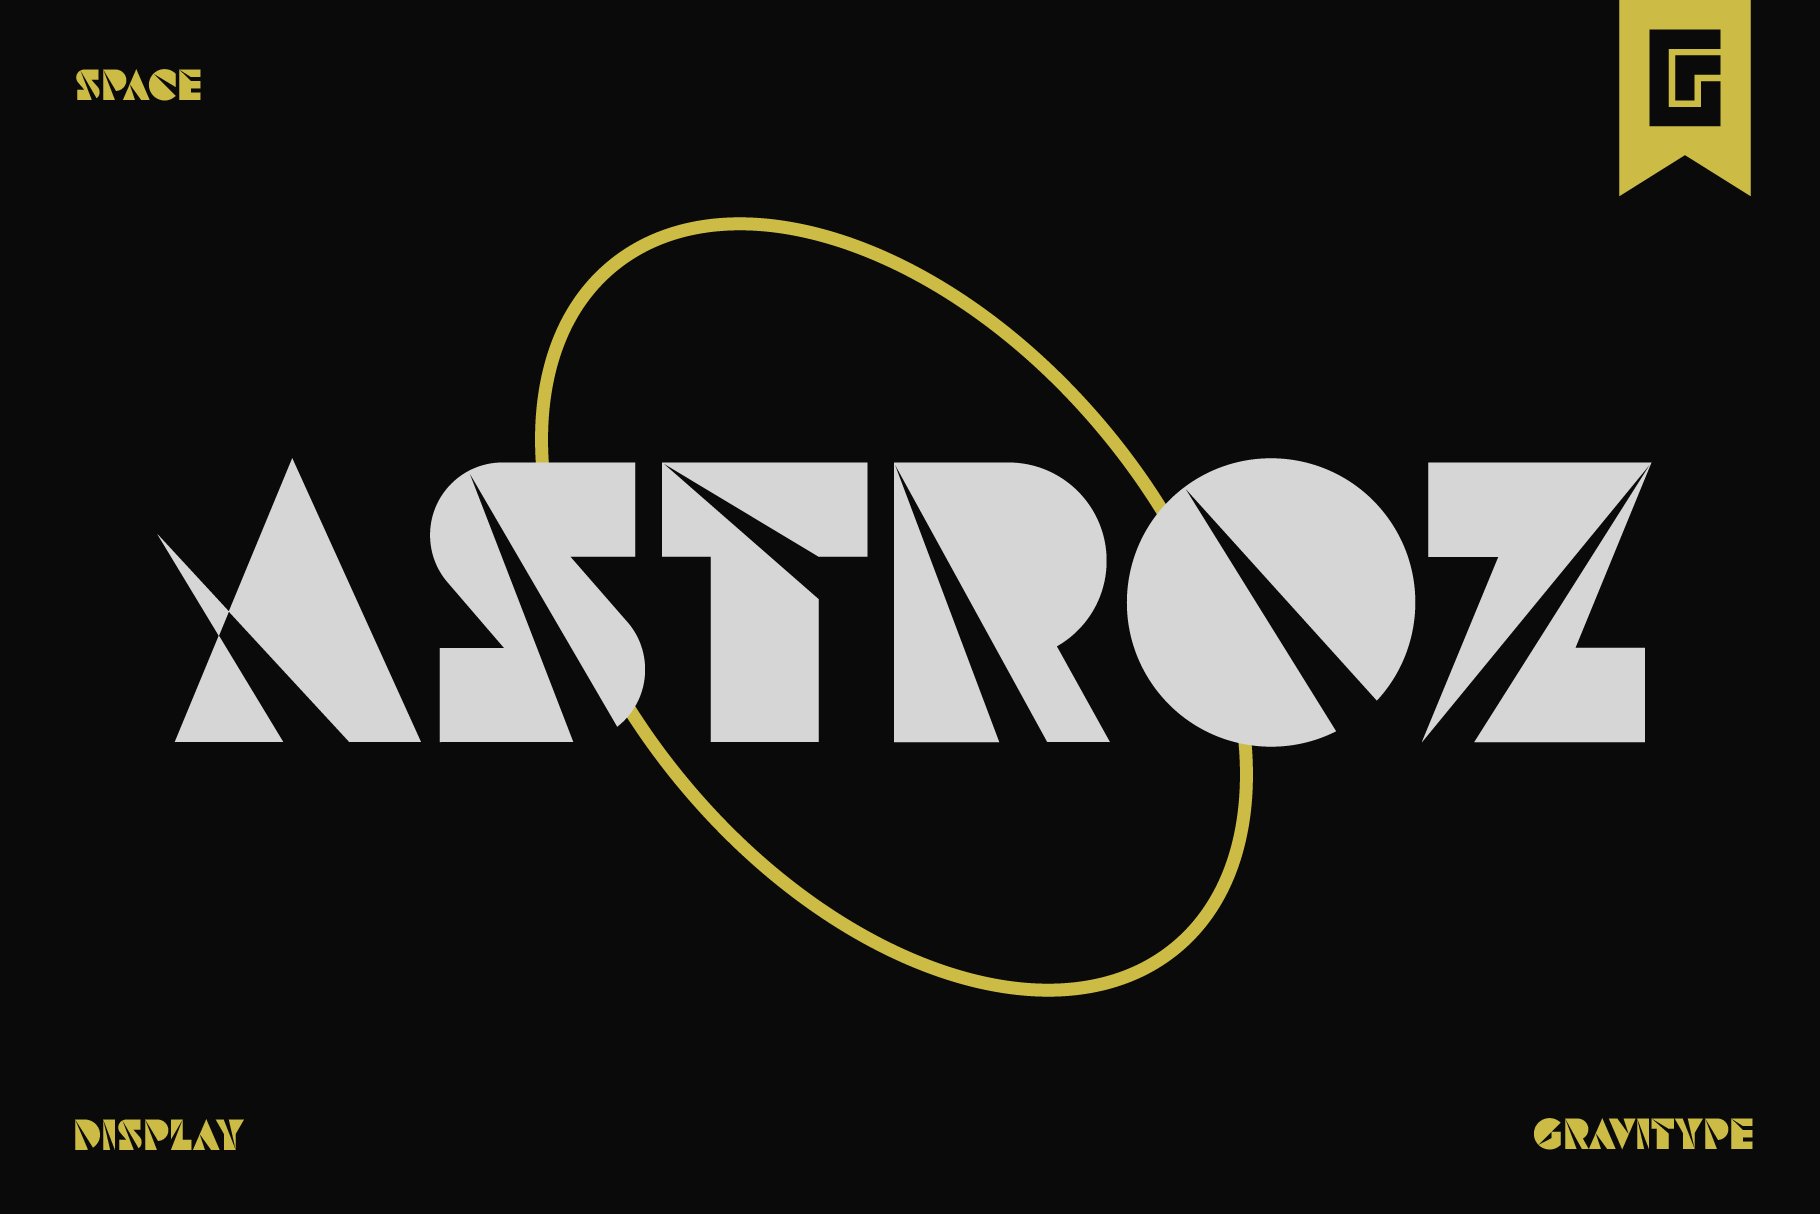 Astroz - Space Futuristic SciFi Font cover image.